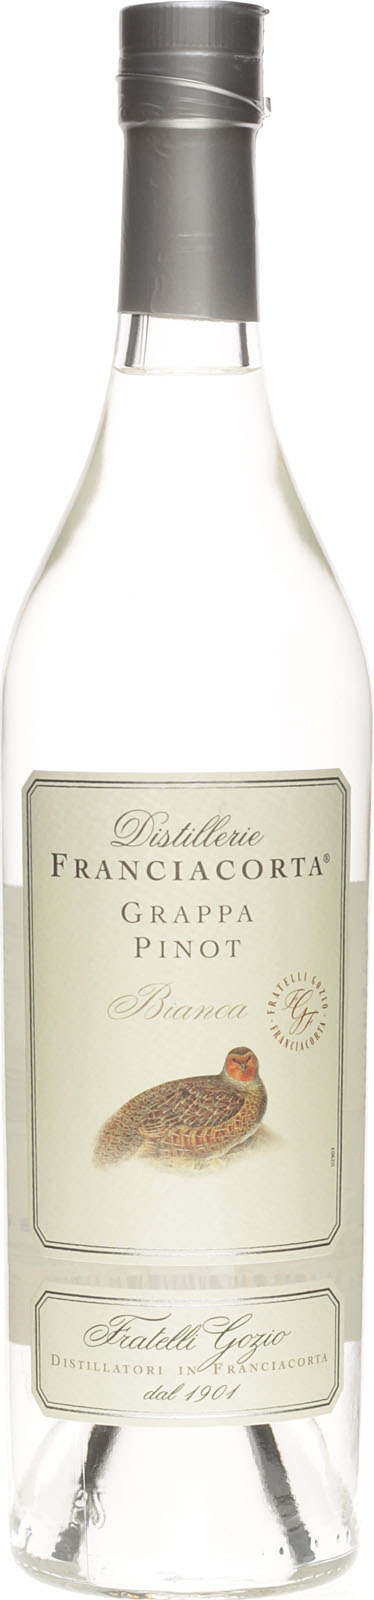 Grappa Pinot von Franciacorta 500ml 43%